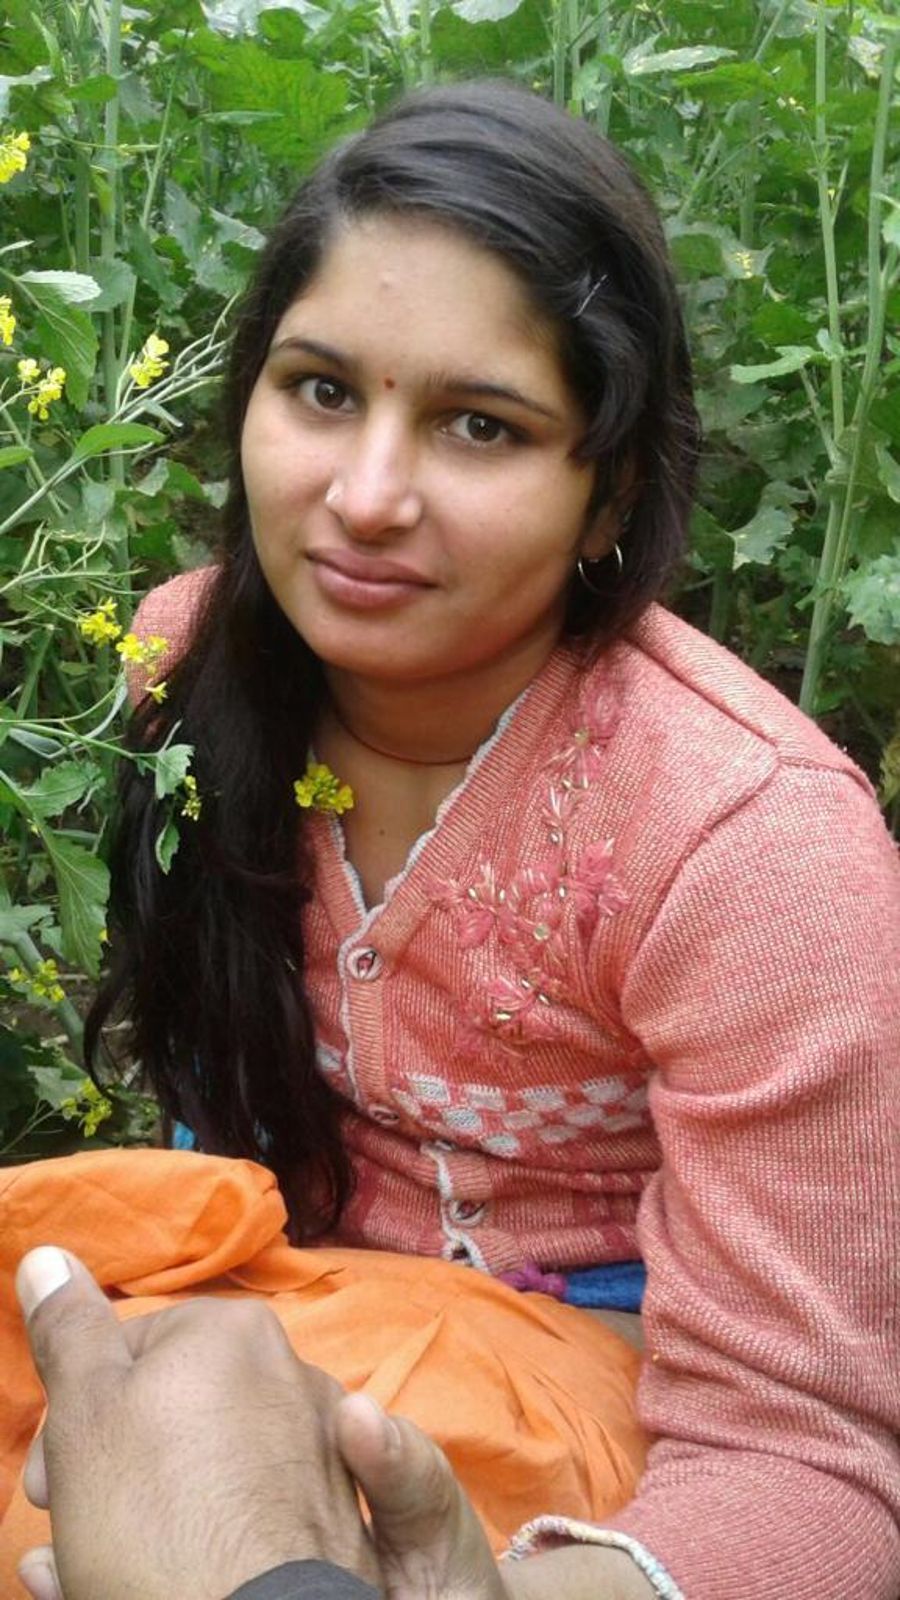 Very beautiful indian girl outdoor